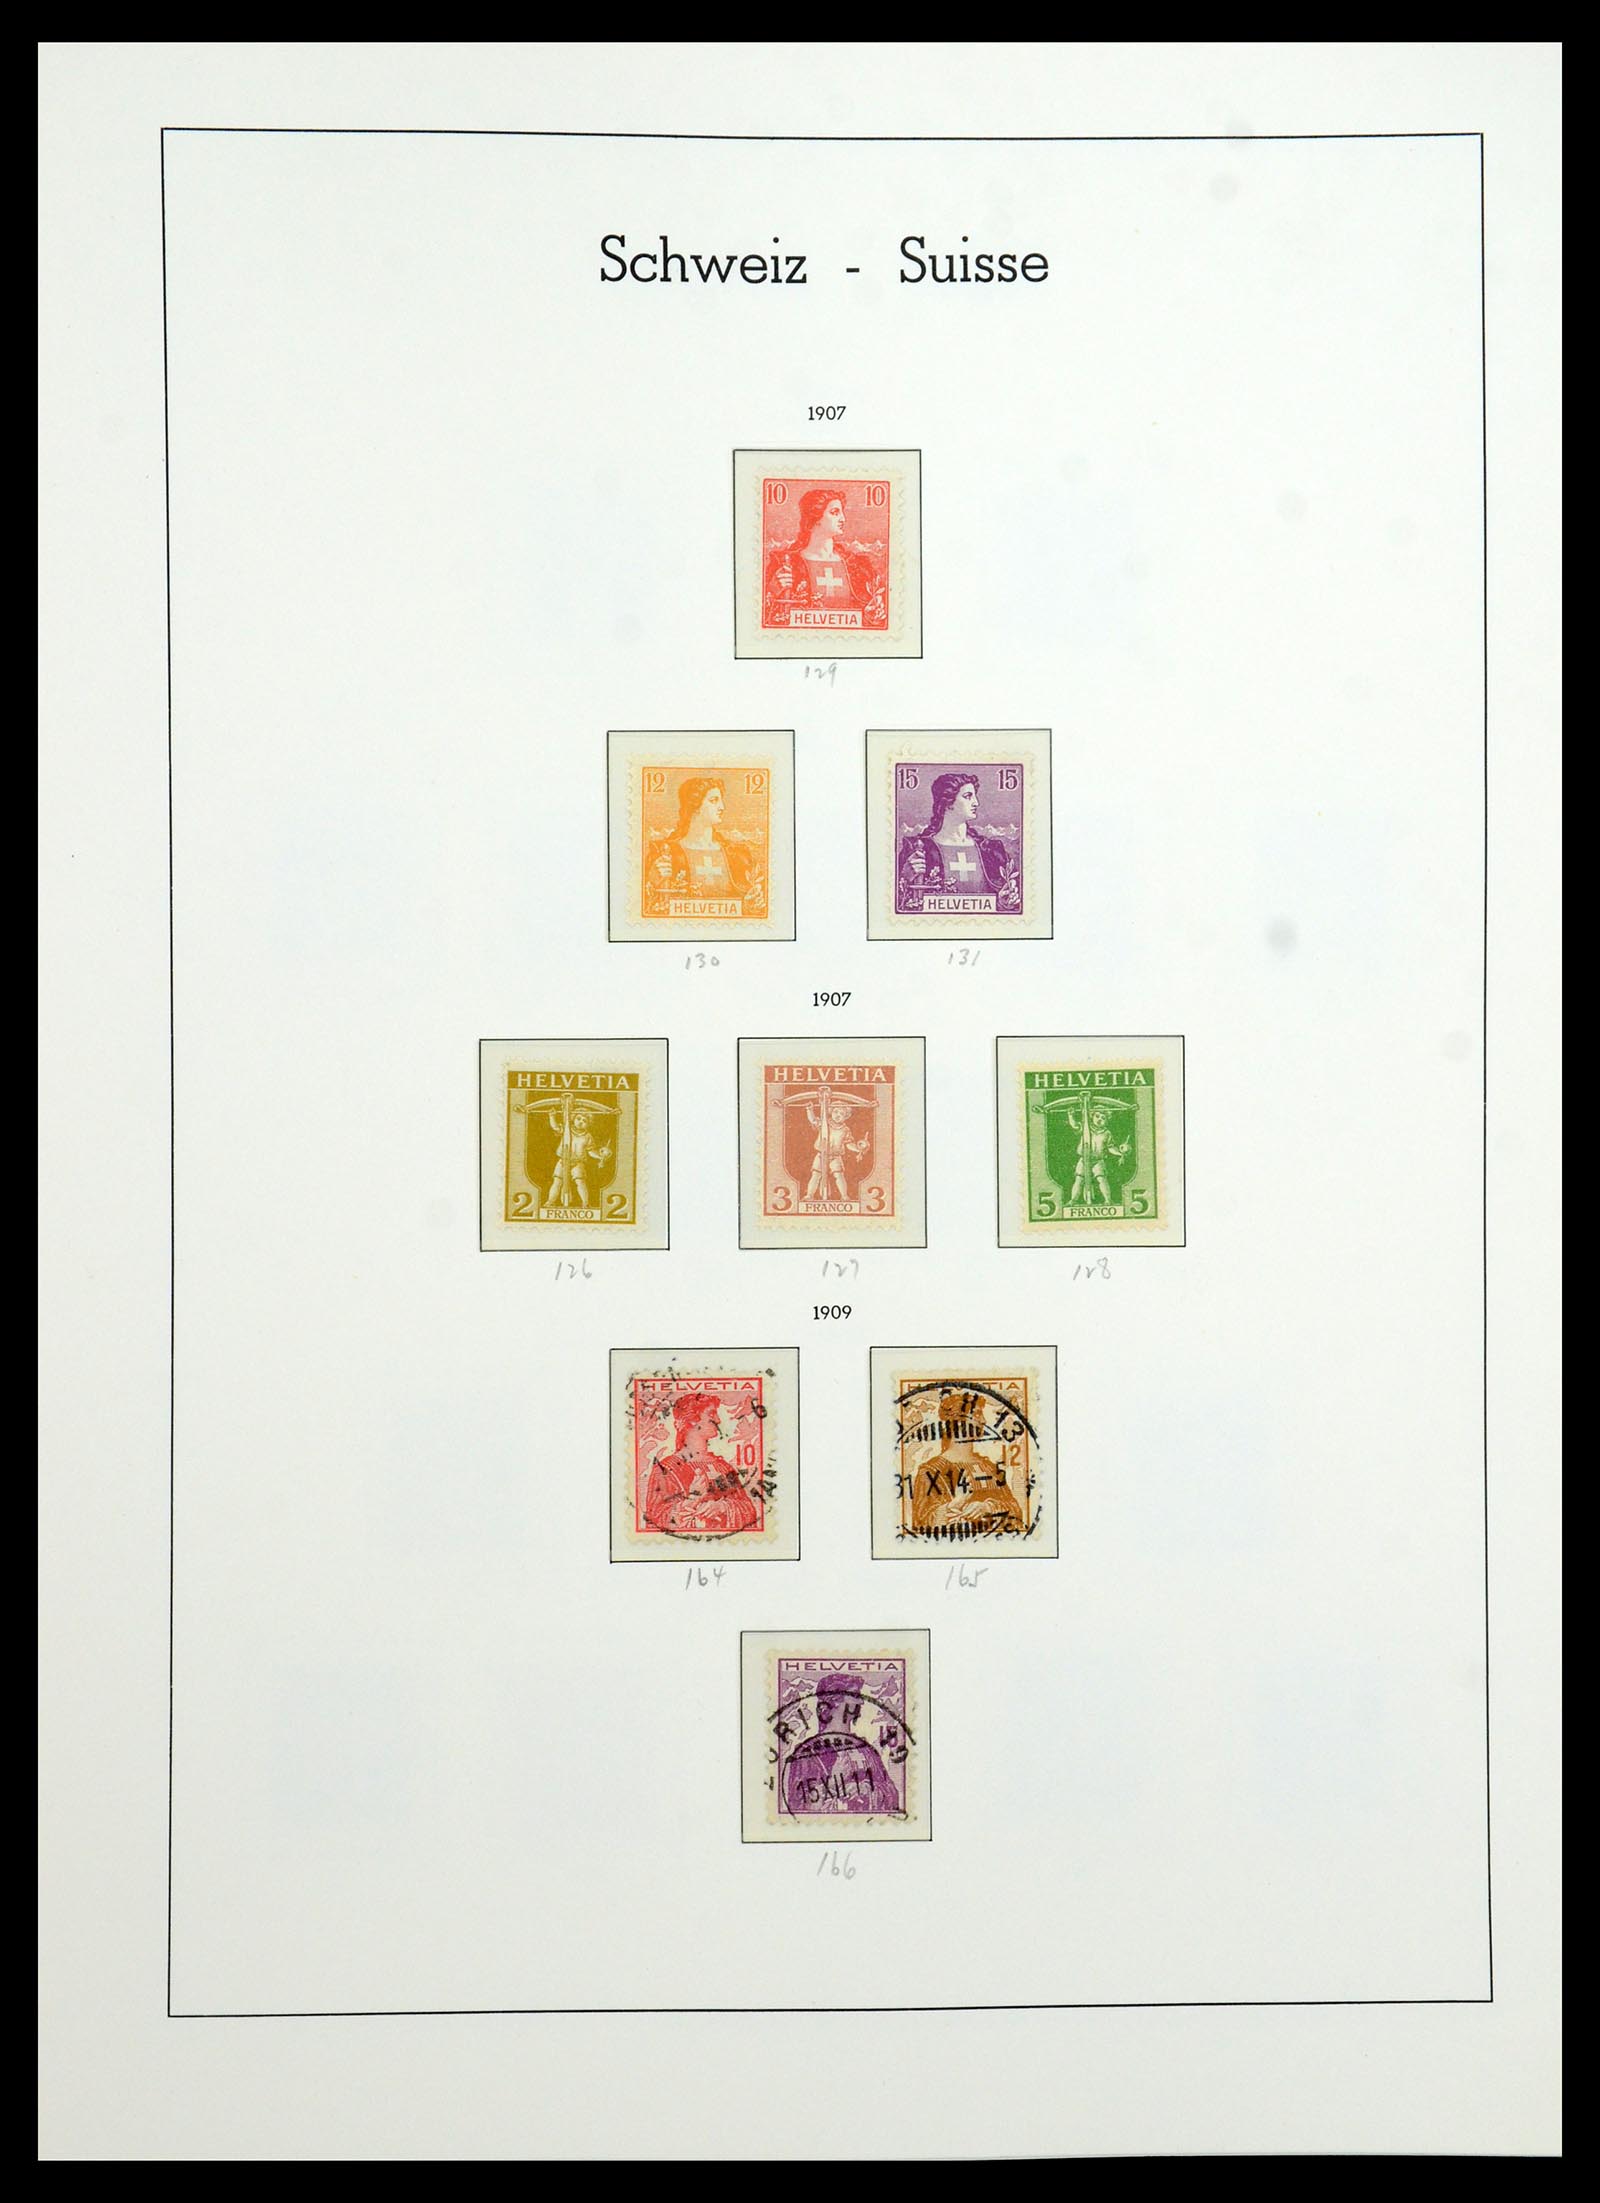 36284 011 - Stamp collection 36284 Switzerland 1854-2006.